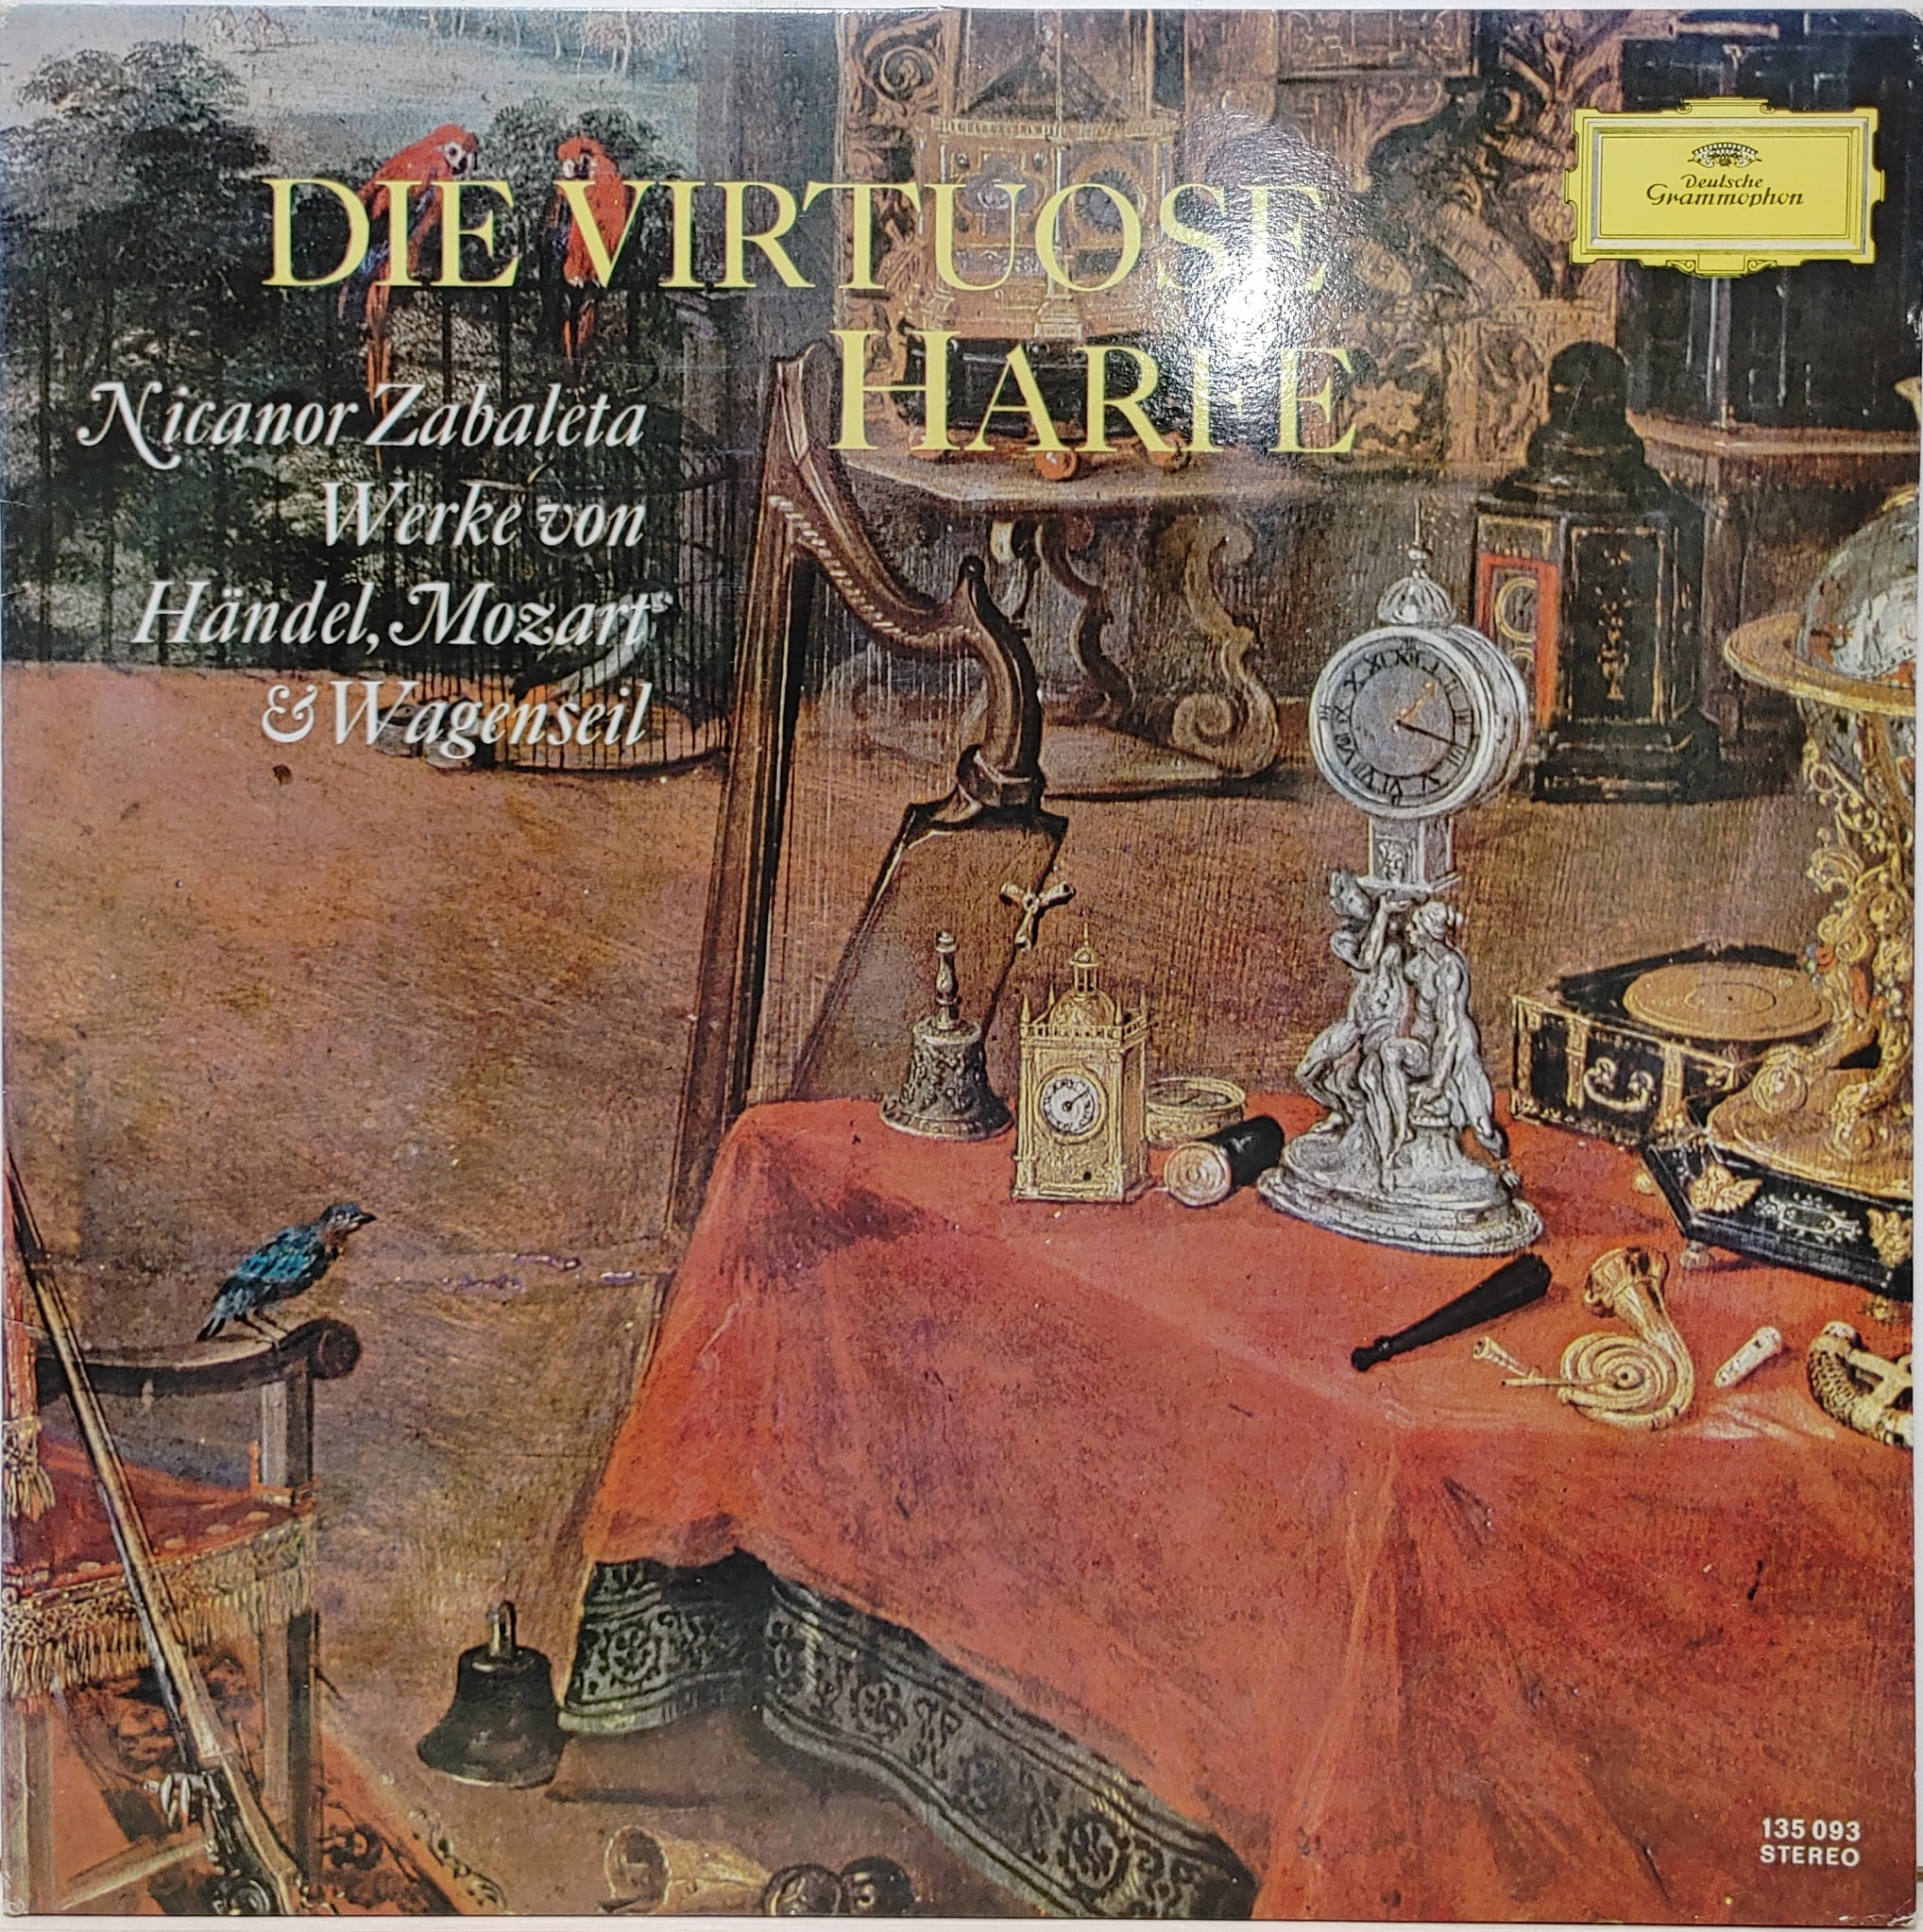 Die Virtuose Harfe / Nicanor Zabaleta Karlheinz Zoller Handel Mozart Wagenseil